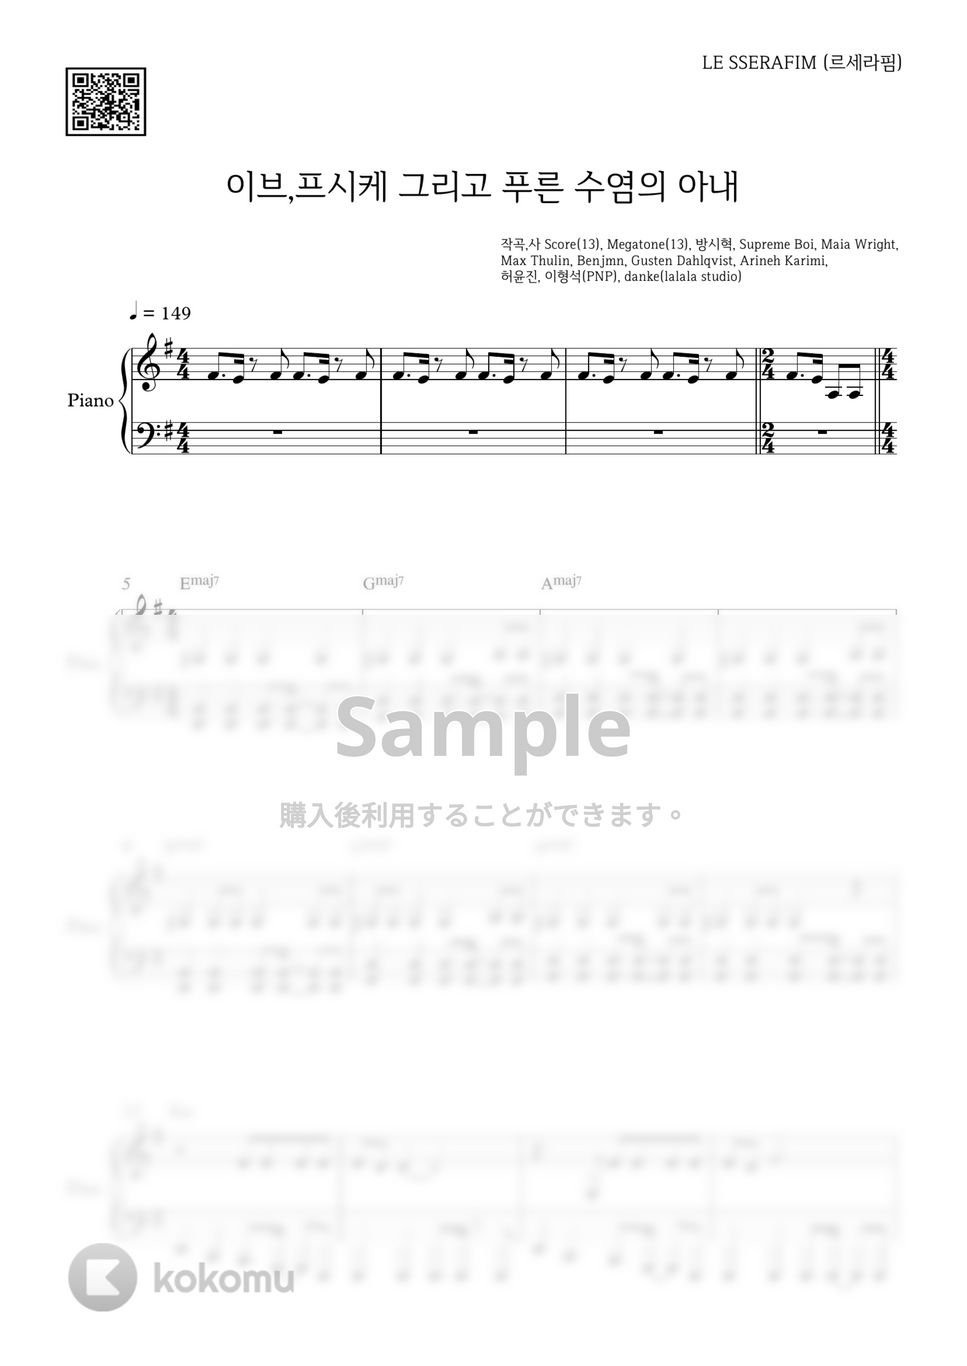 LE SSERAFIM - イブプシュケ (Easy ver.) by PIANOiNU